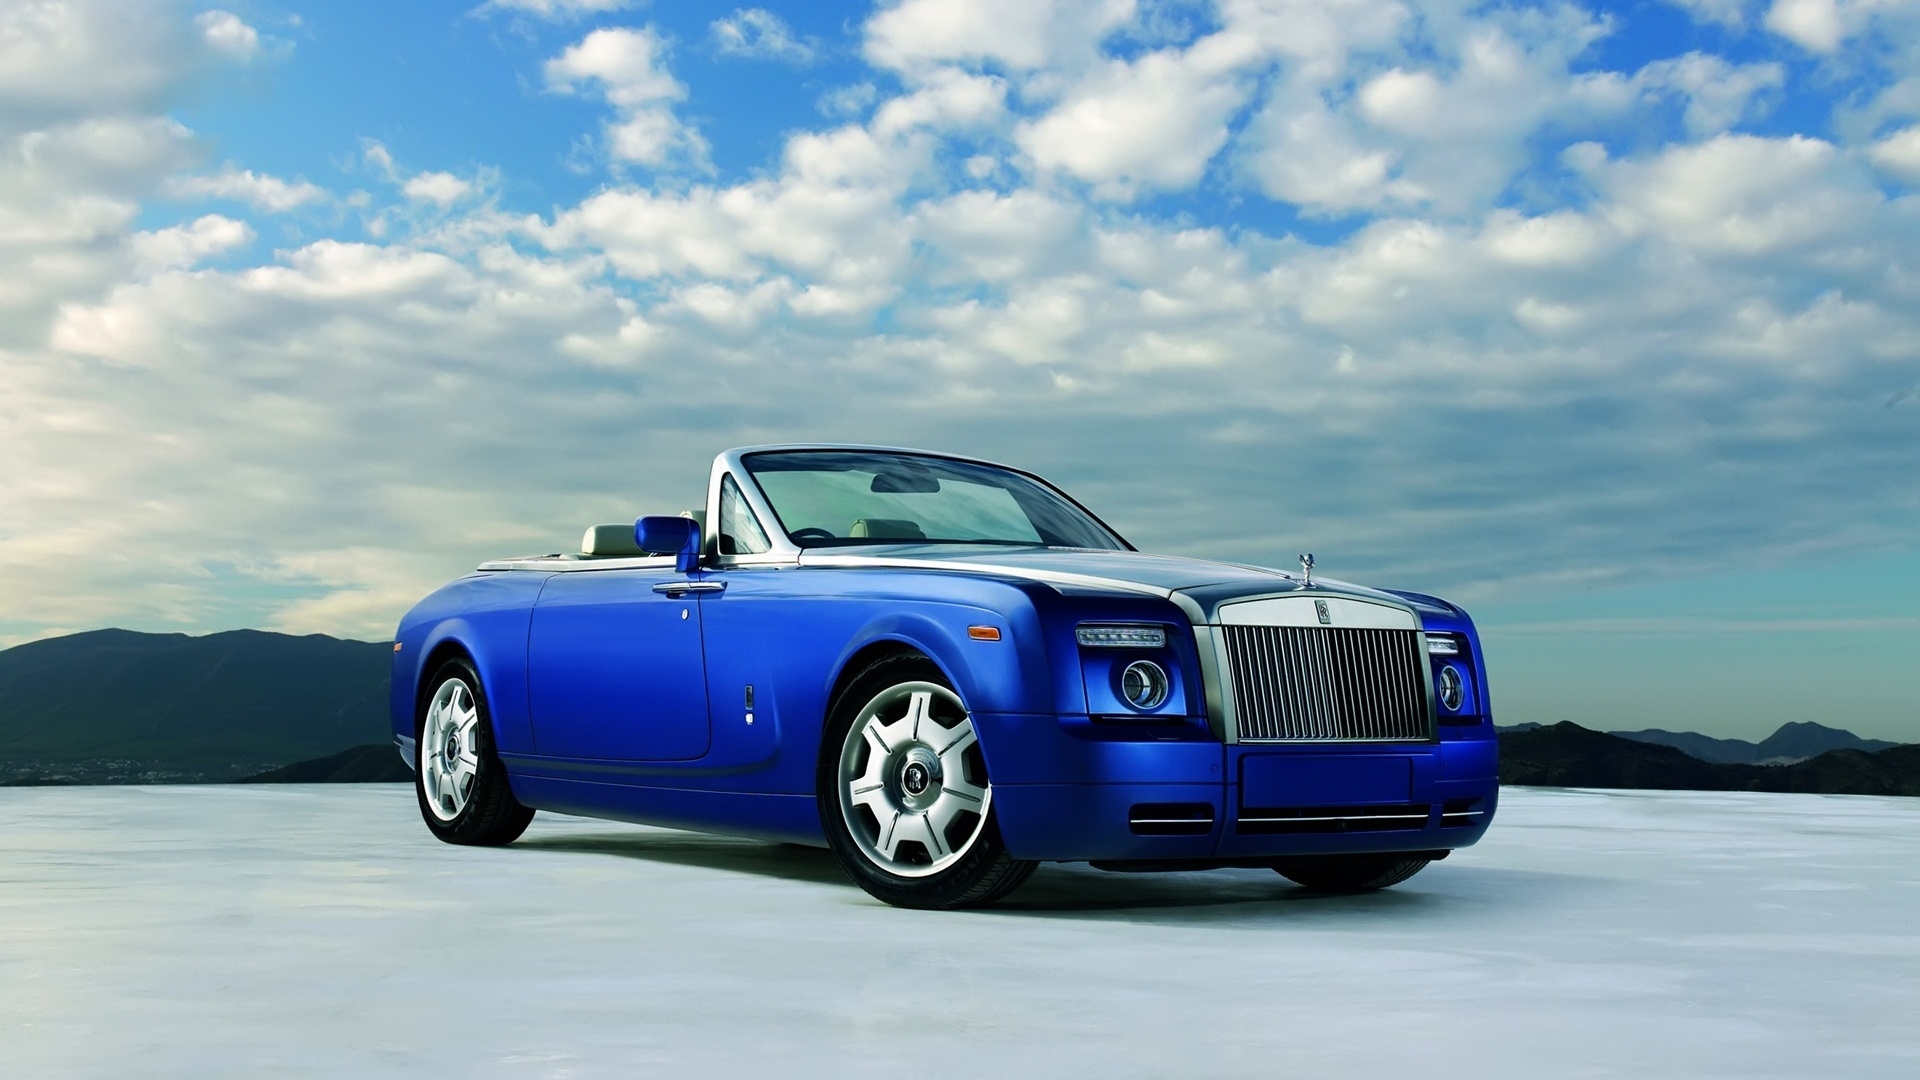 Rolls Royce Phantom Drophead Coupe Blue for 1920 x 1080 HDTV 1080p resolution